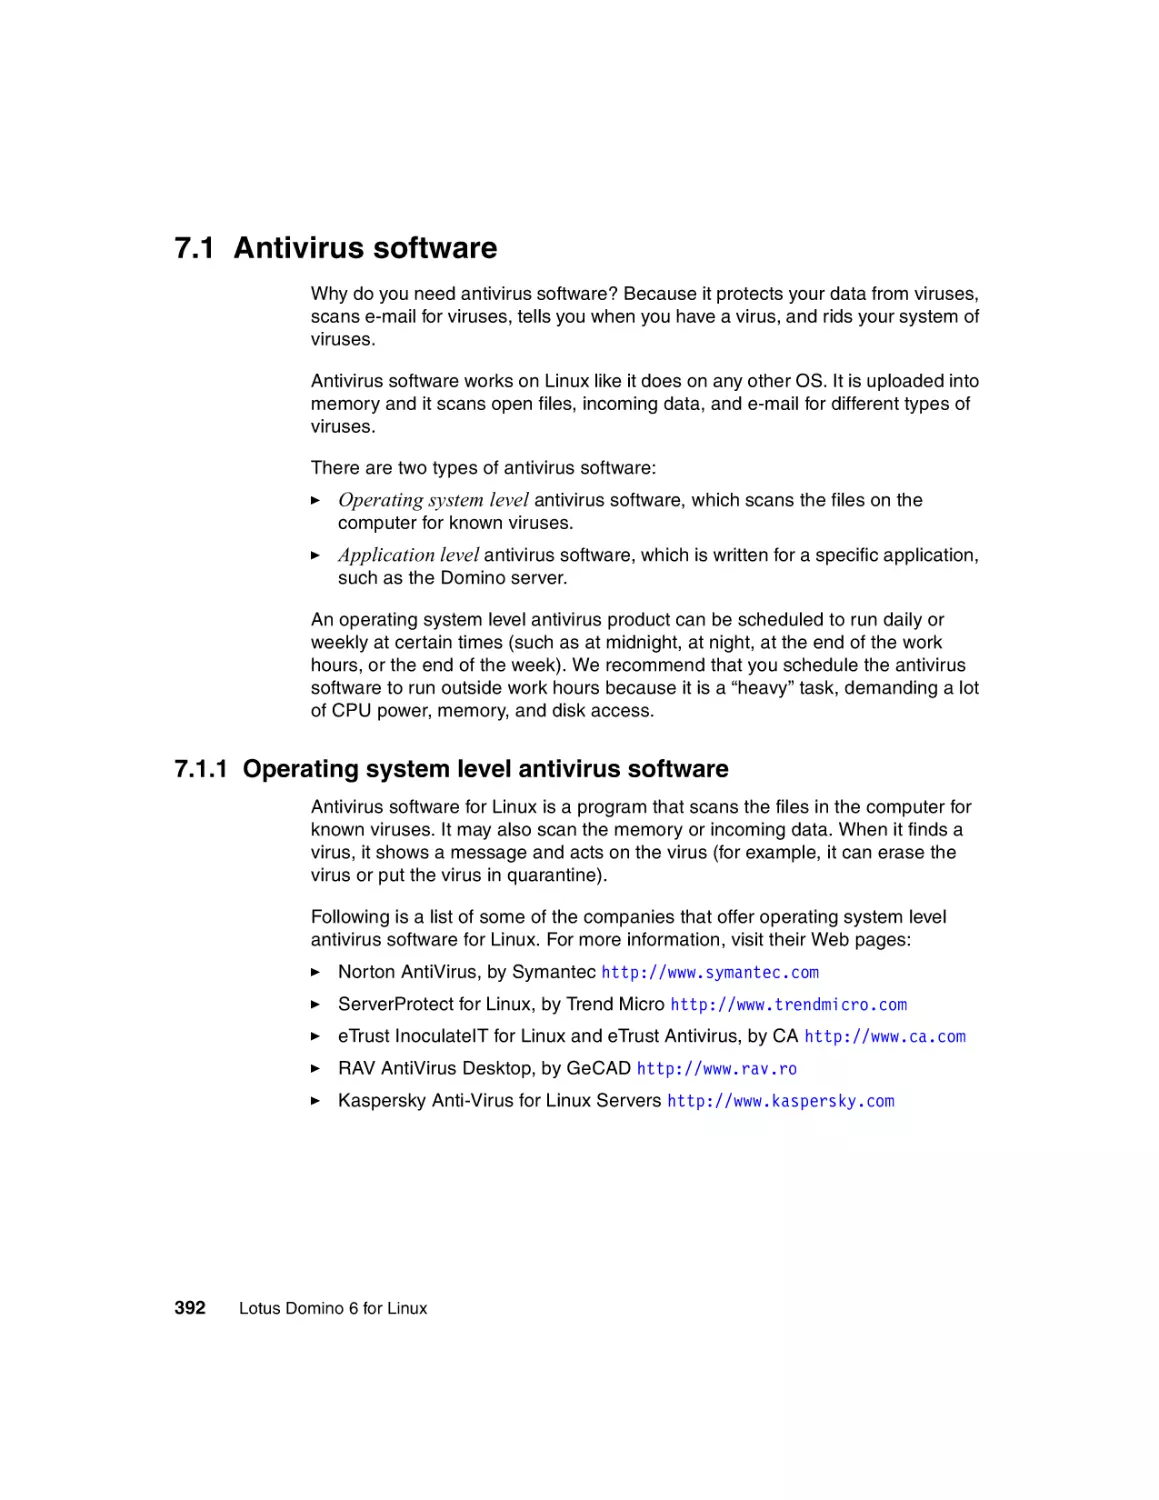 7.1 Antivirus software
7.1.1 Operating system level antivirus software